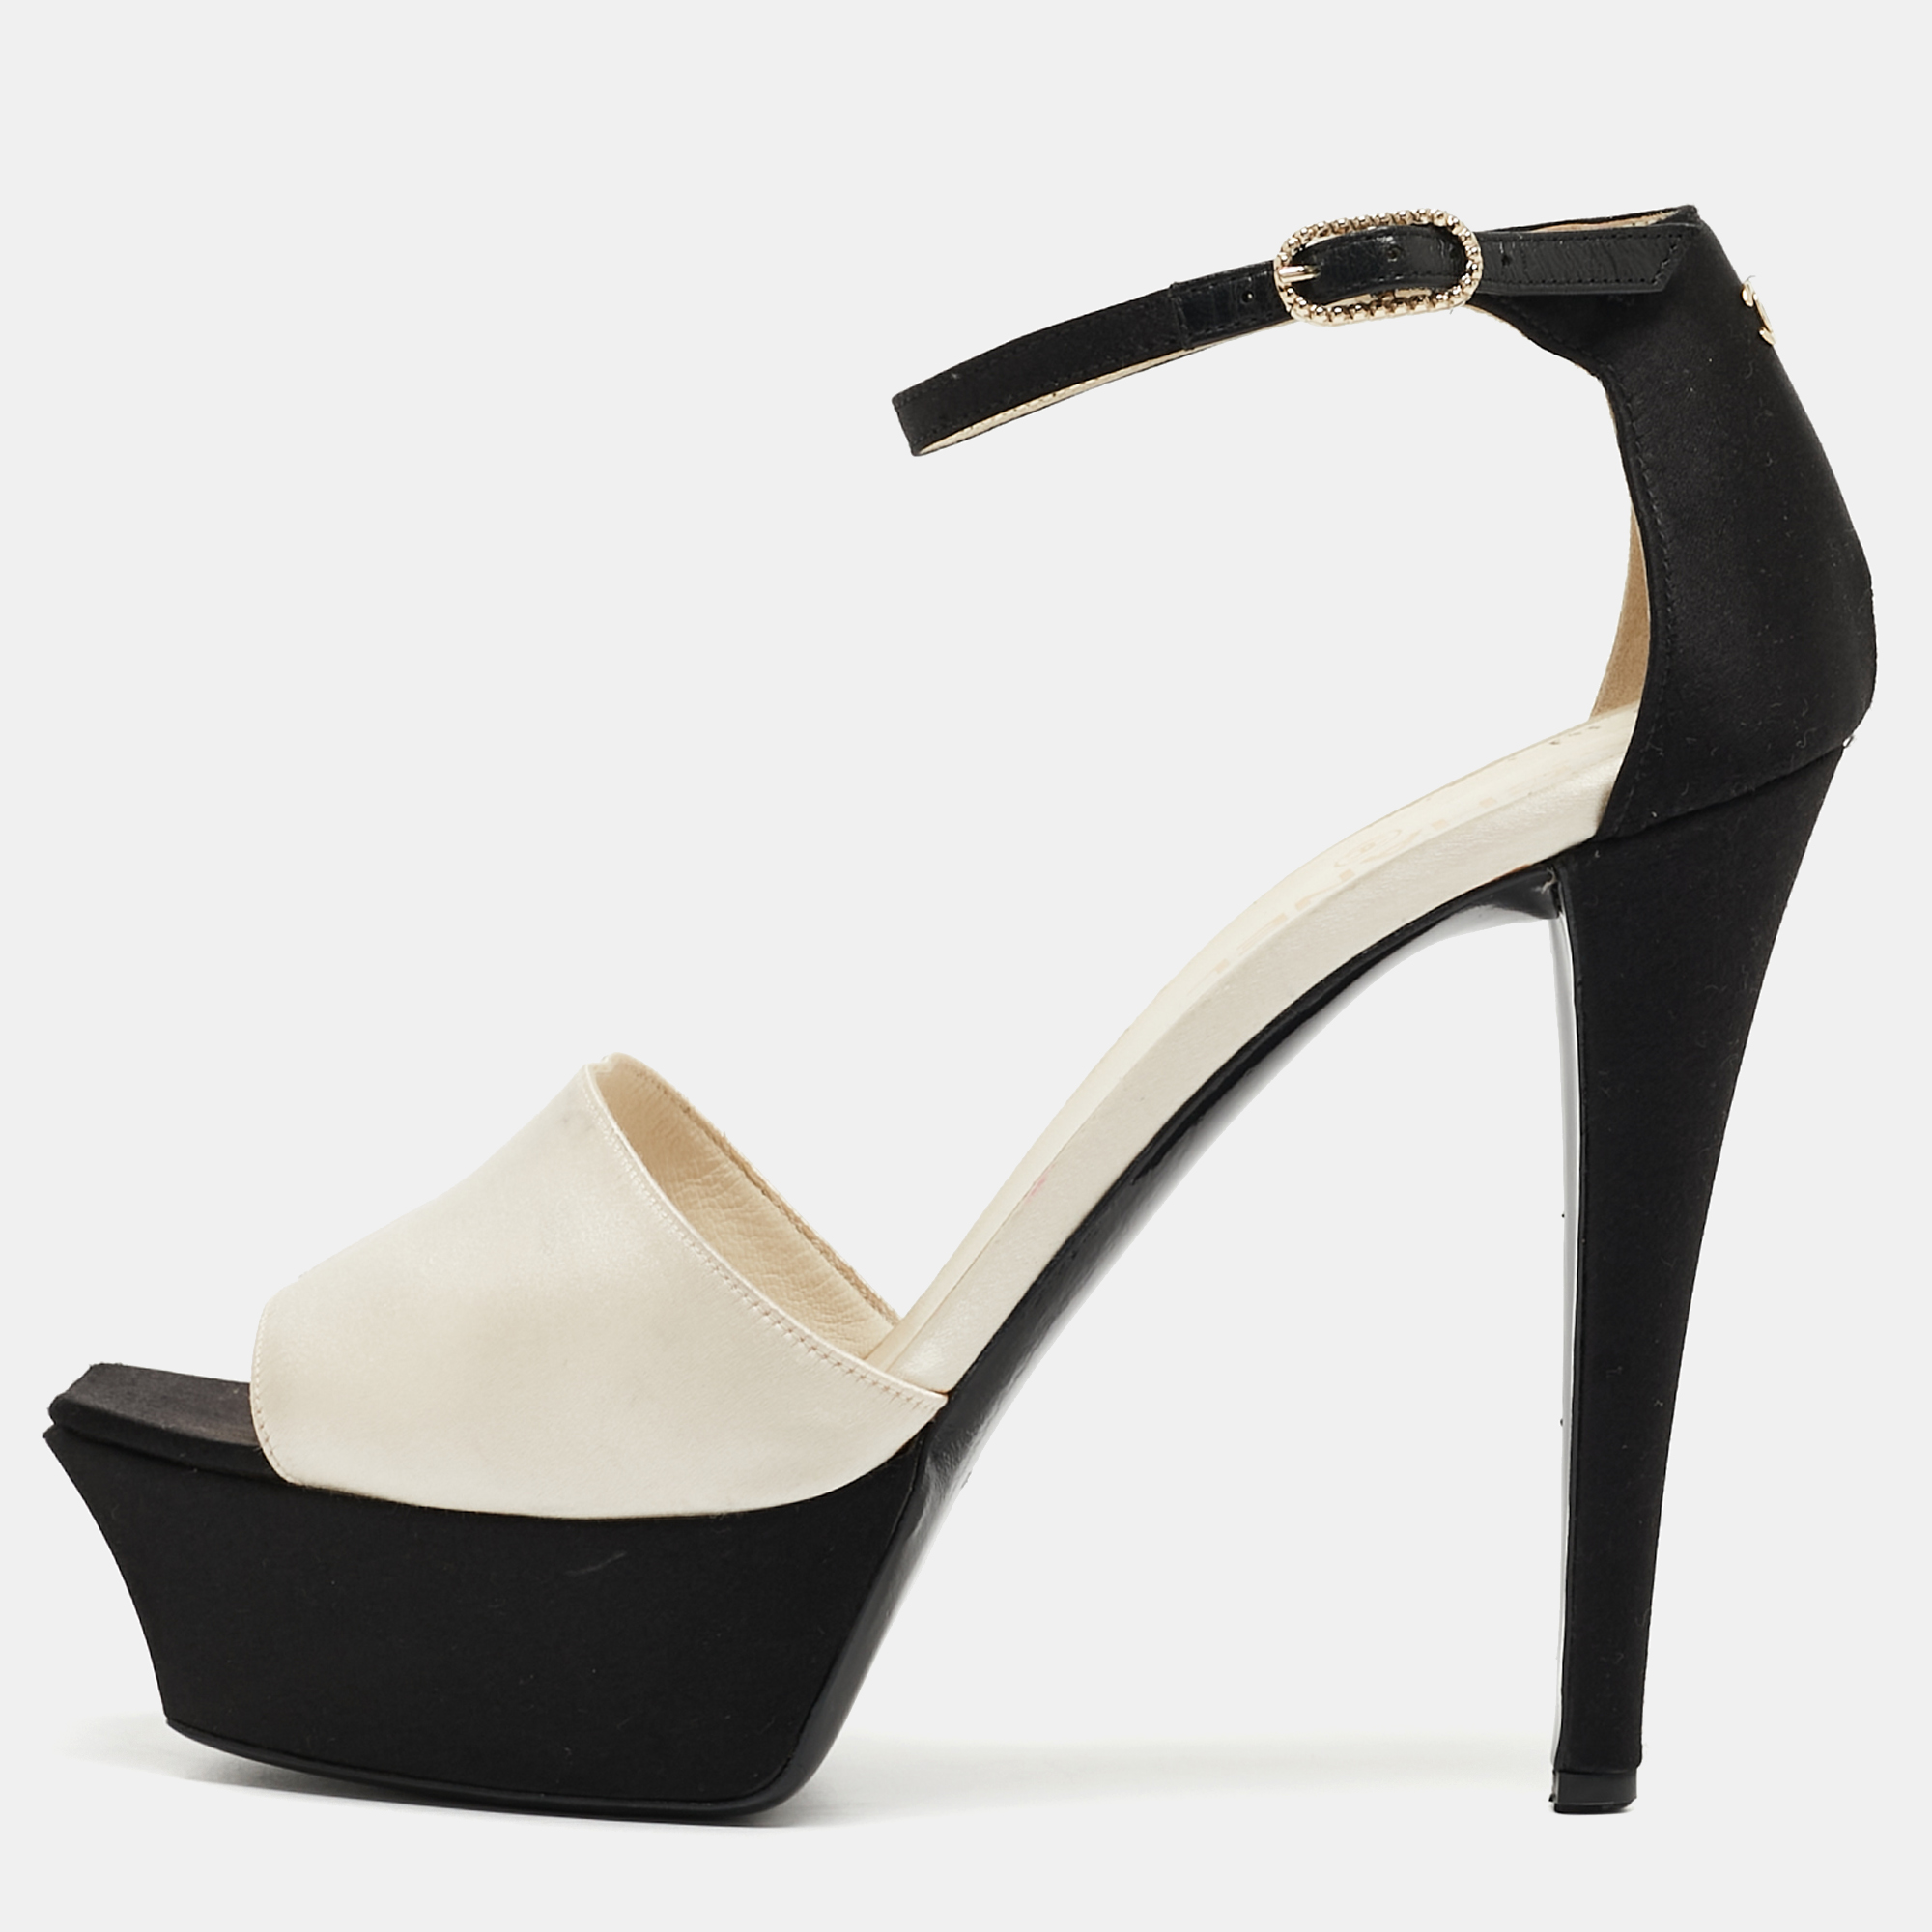 Chanel white/black satin peep toe  sandals size 39.5